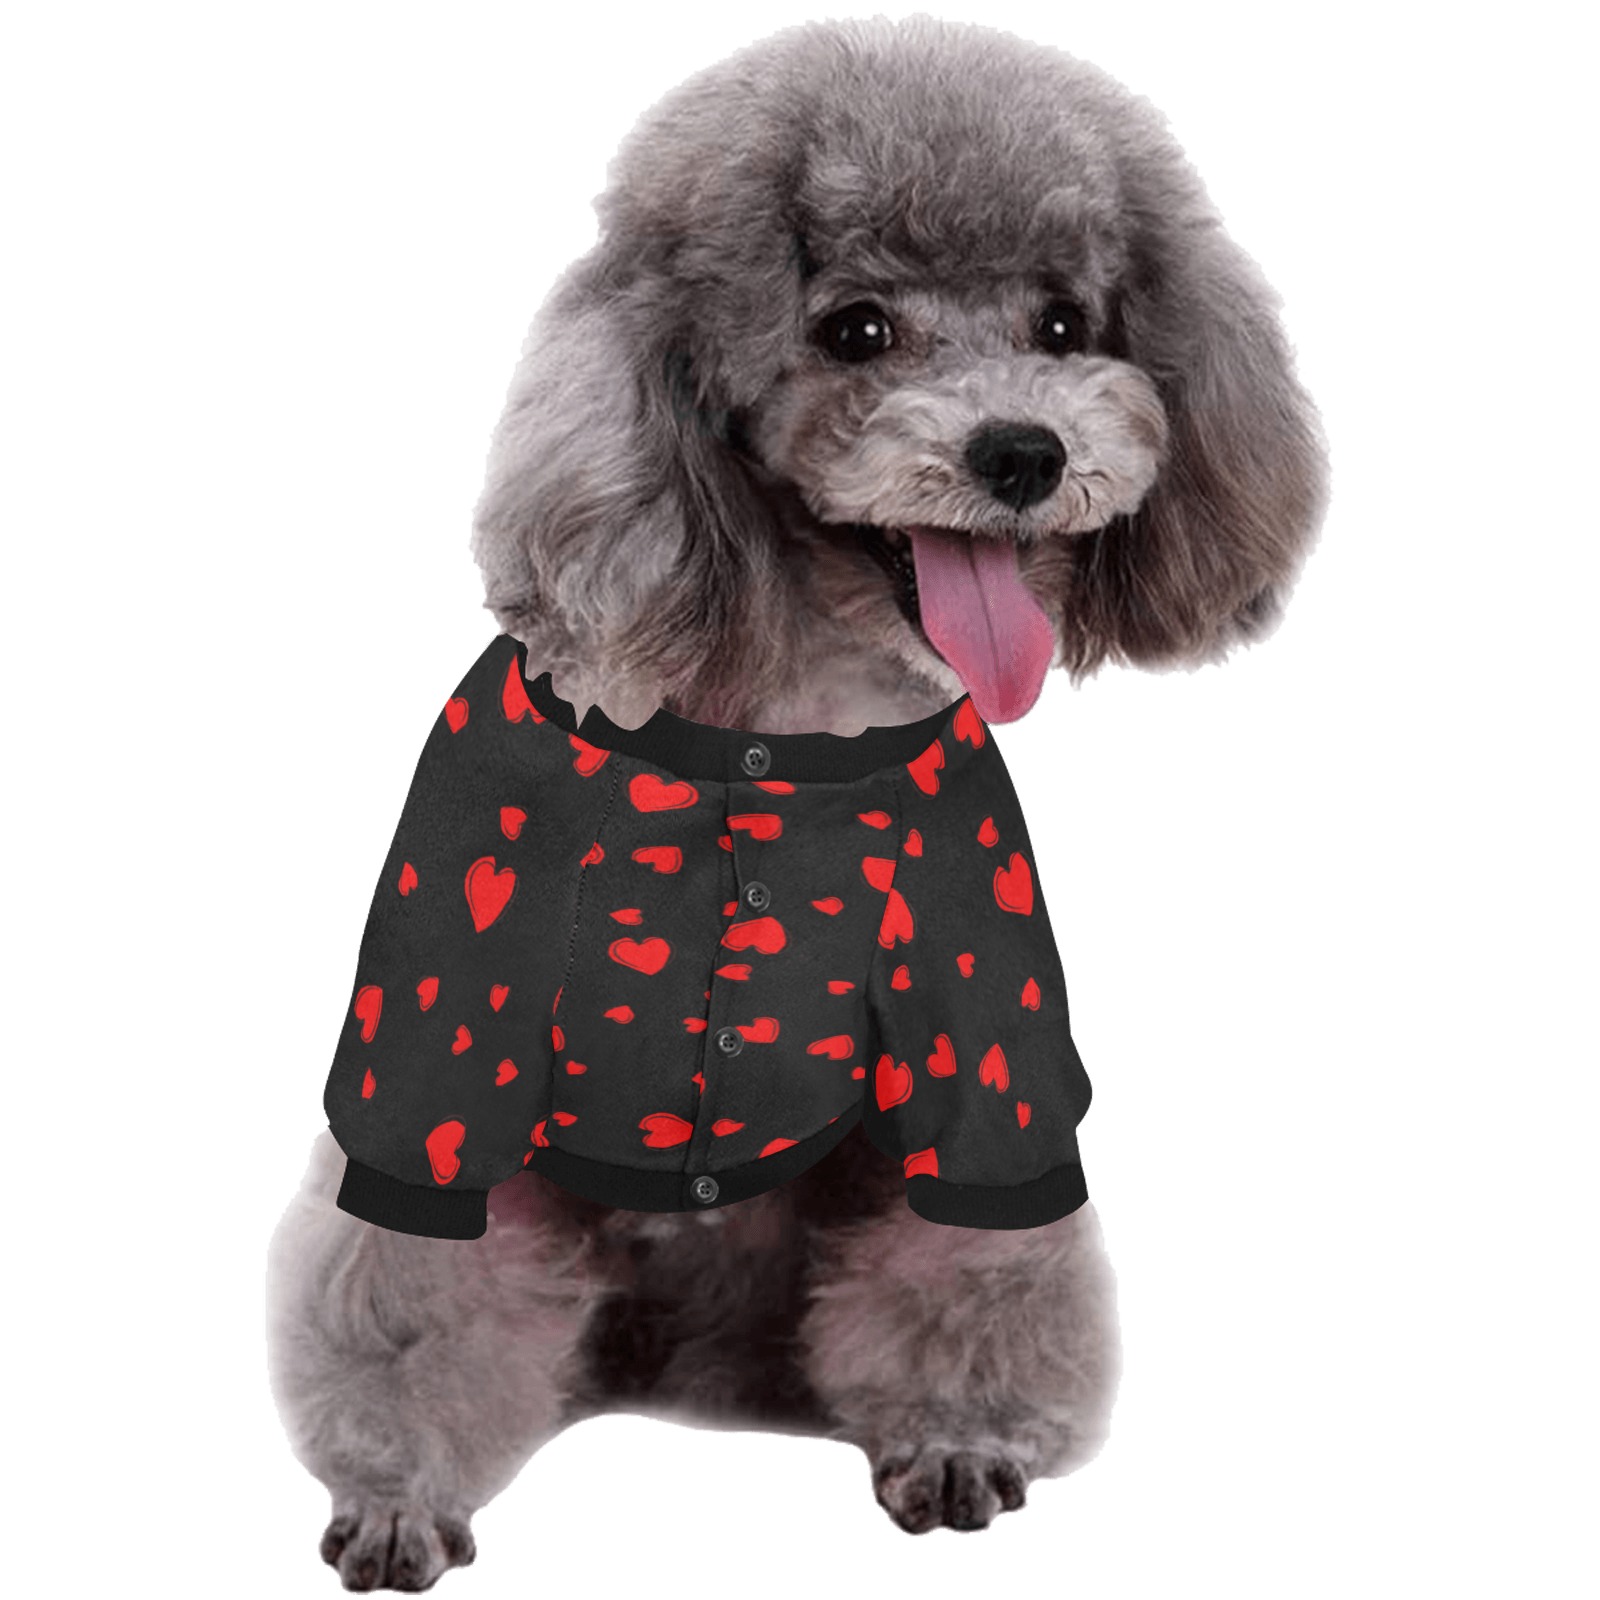 Red Hearts Floating on Black Pet Dog Round Neck Shirt